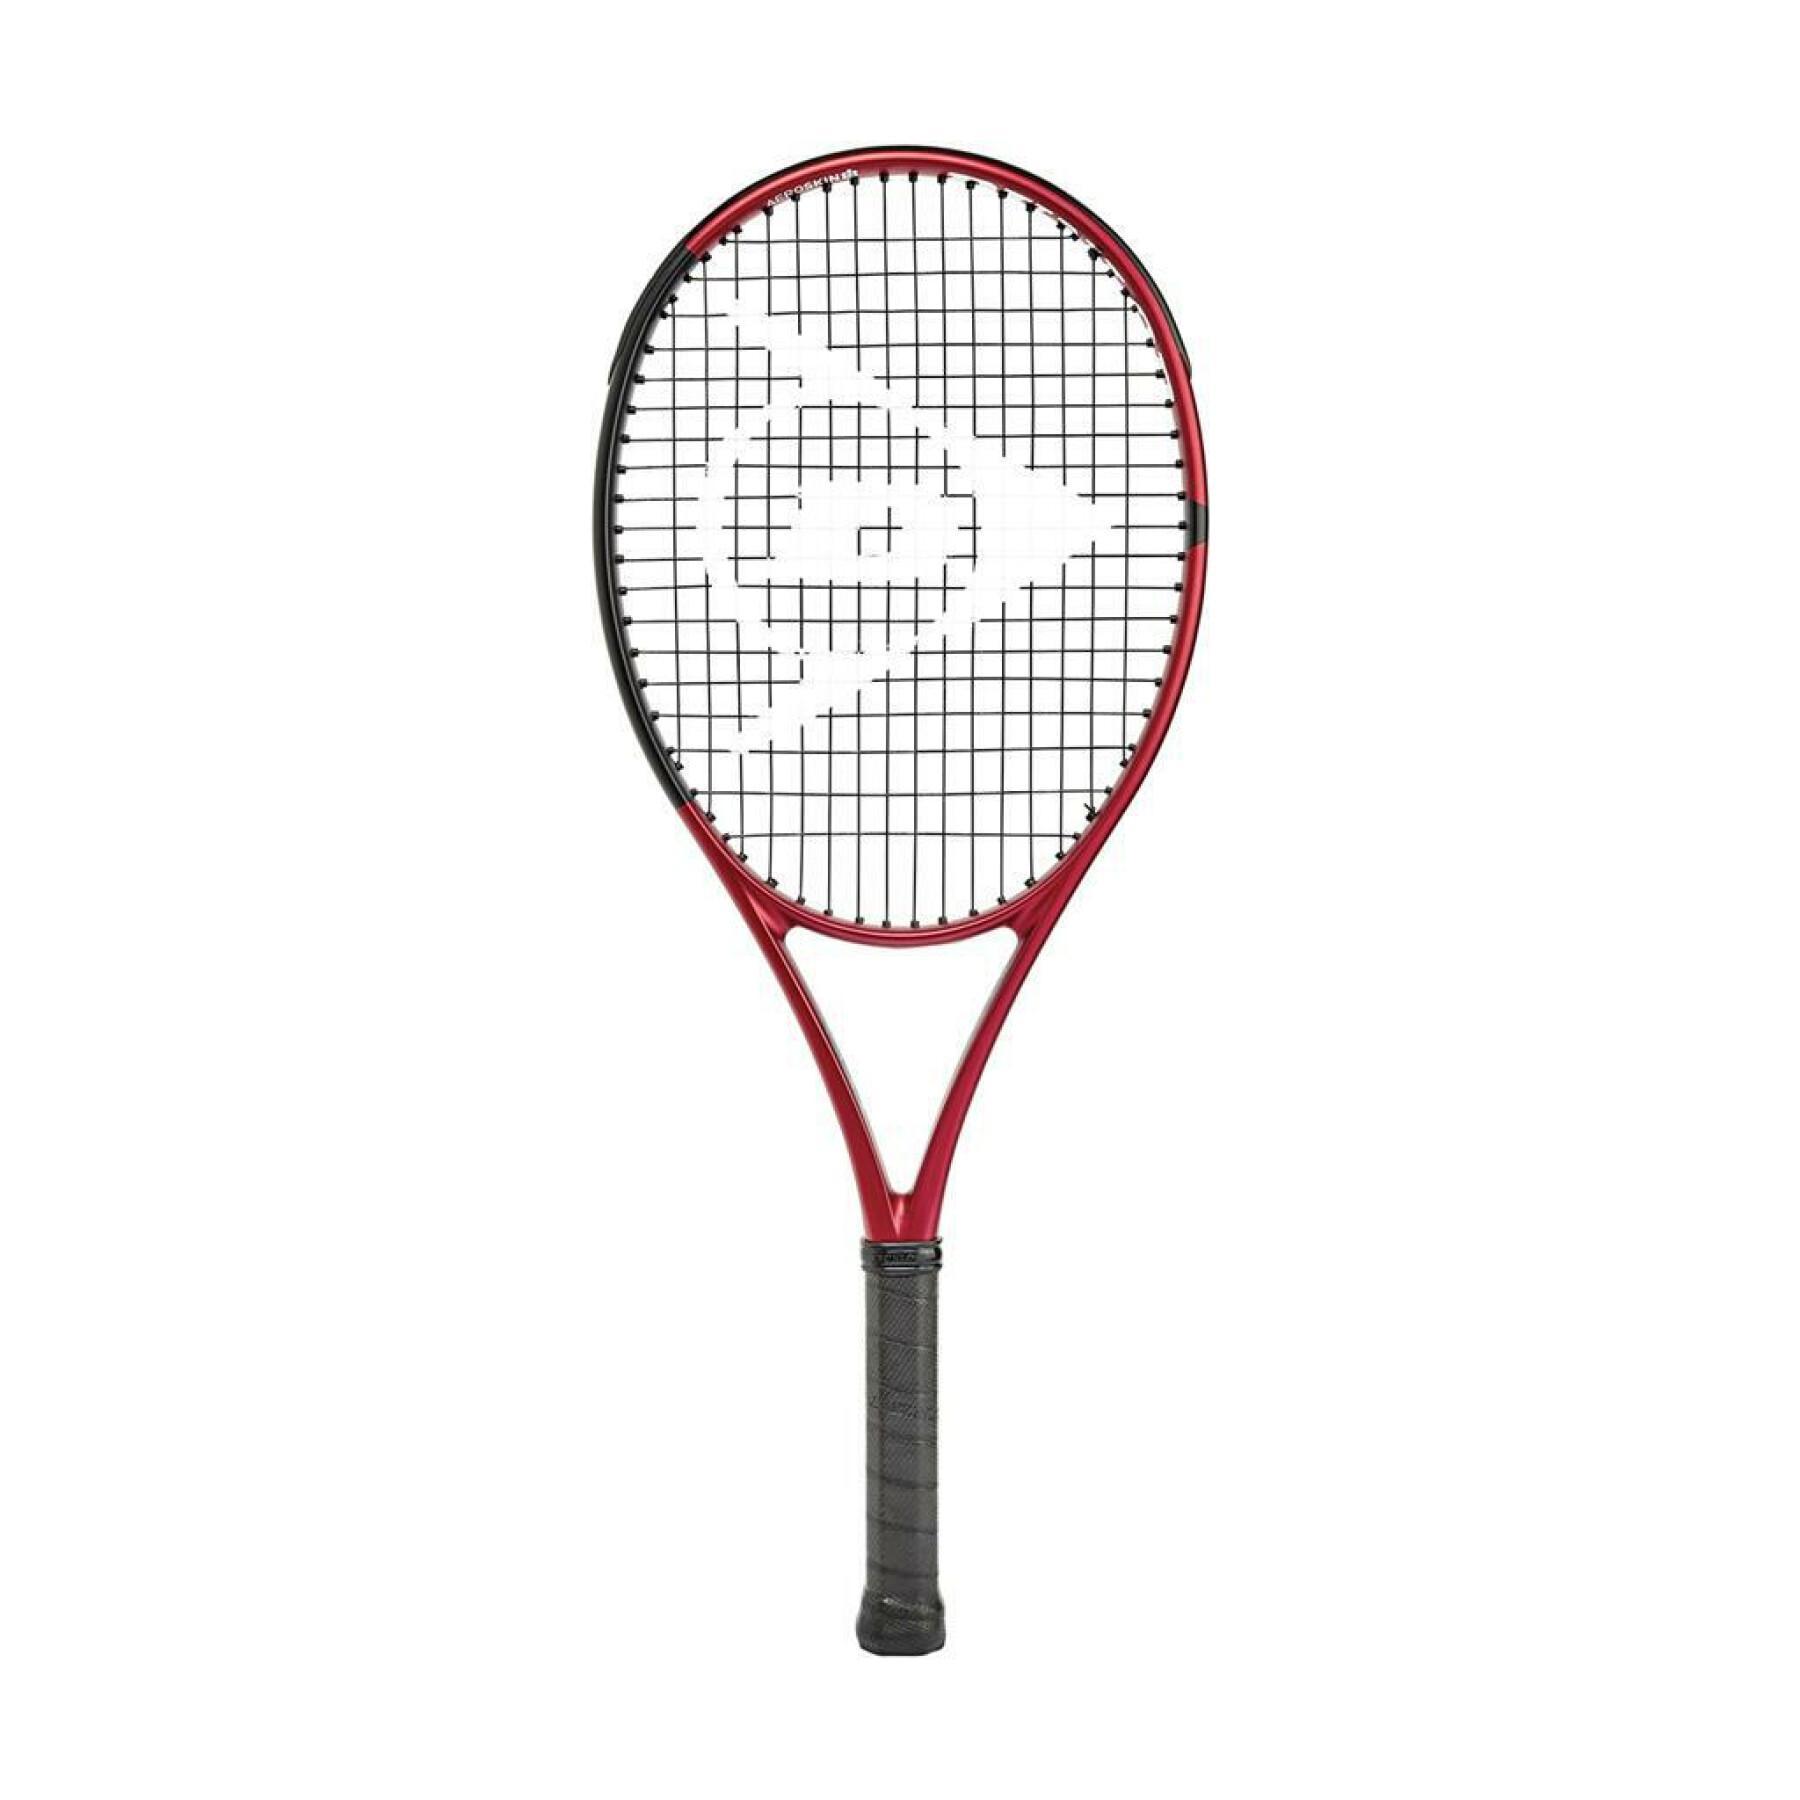 Children's racket Dunlop cx 200 26 g0